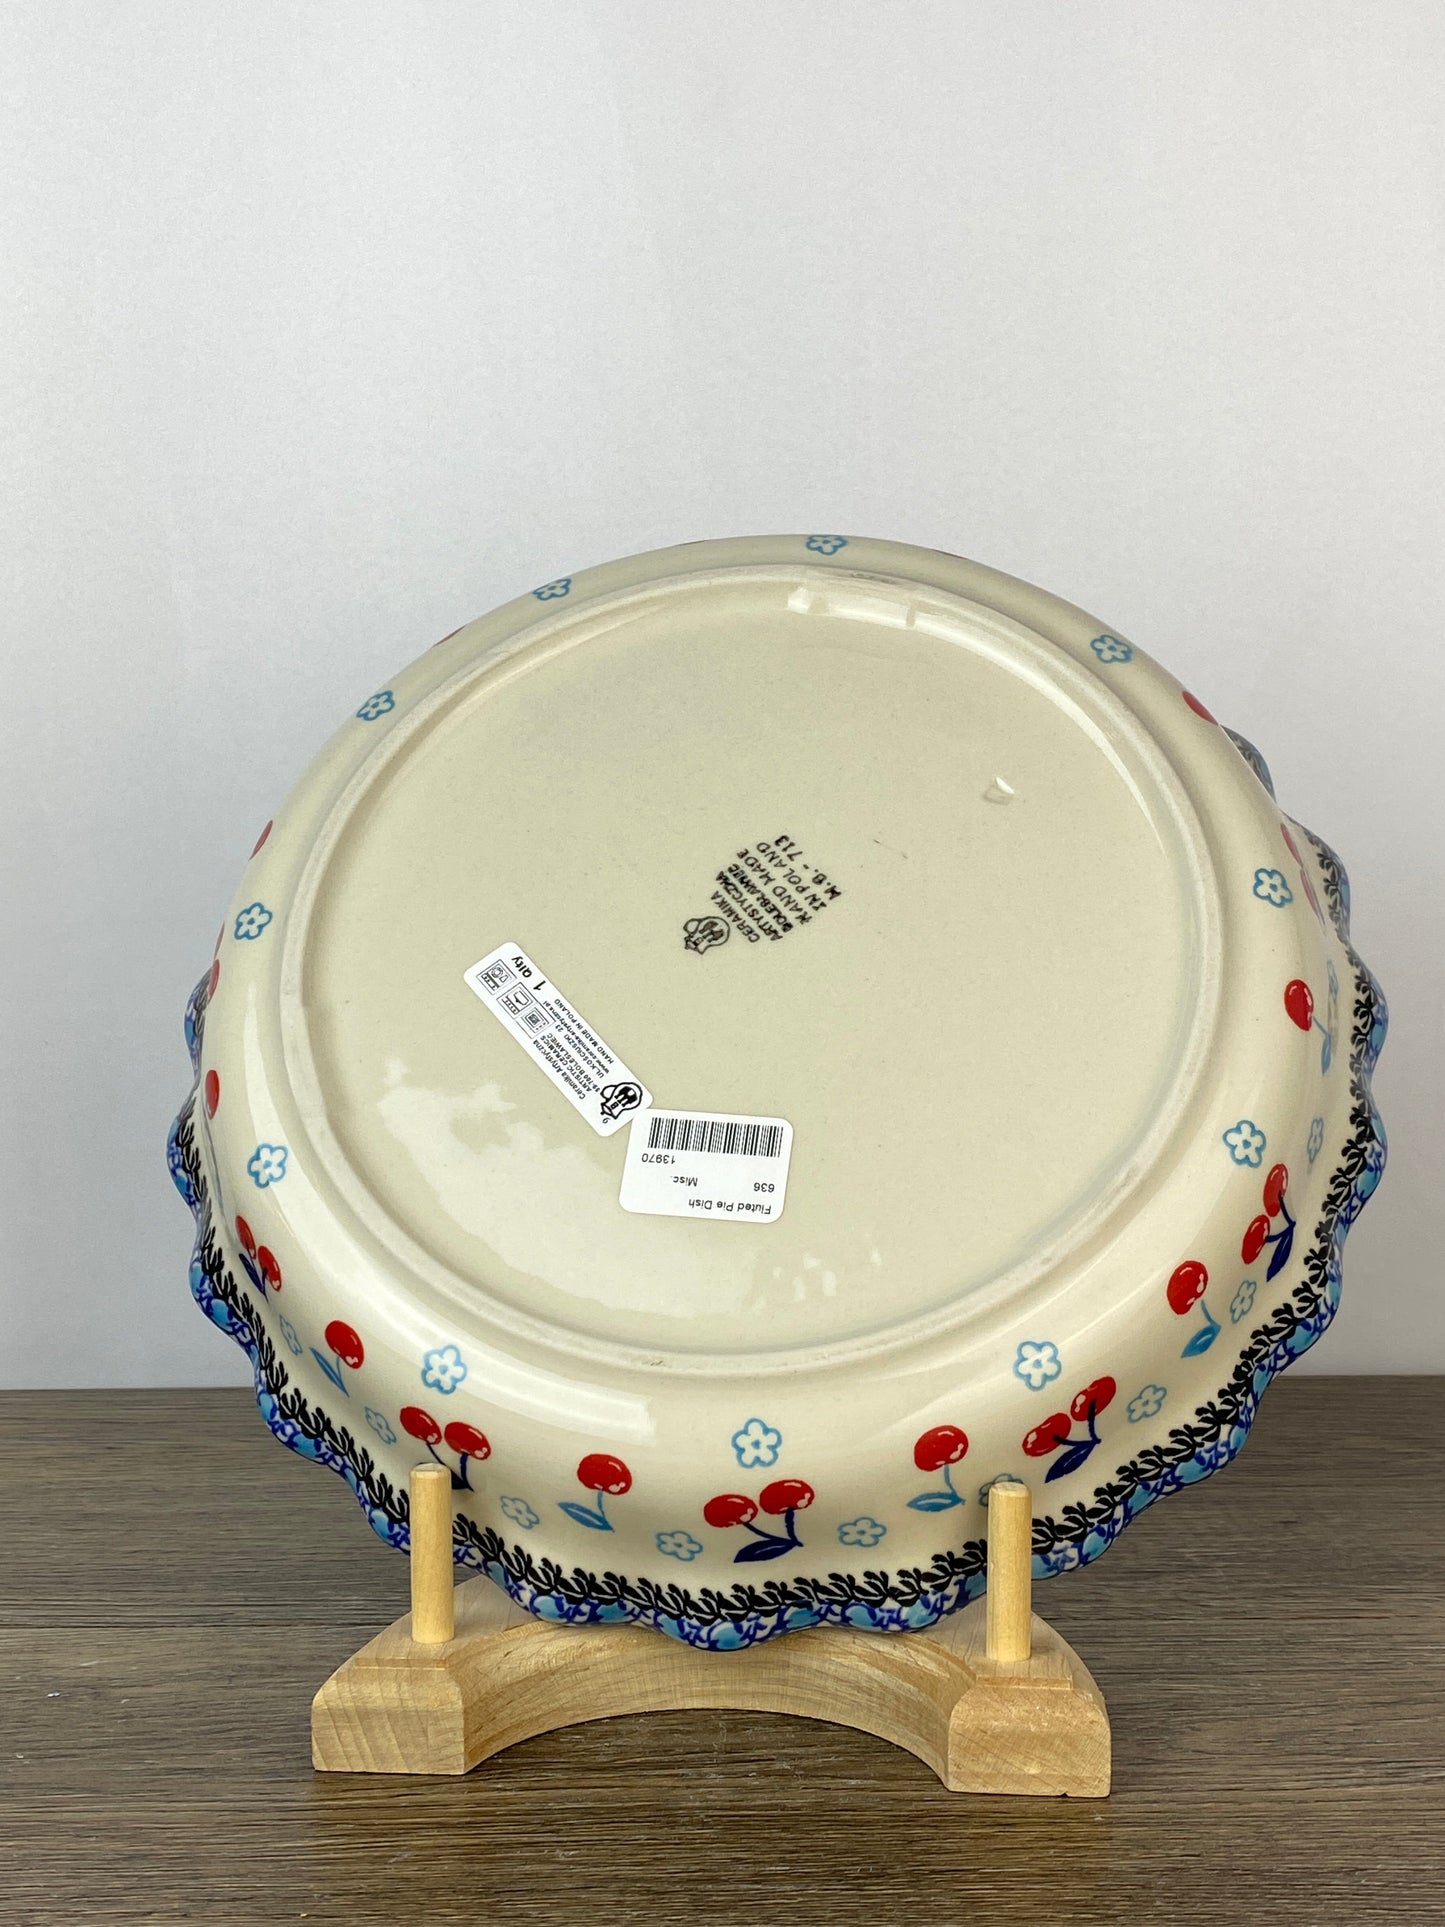 SALE Ruffled Pie Plate / Round Baking Dish - Shape 636 - Pattern 2701